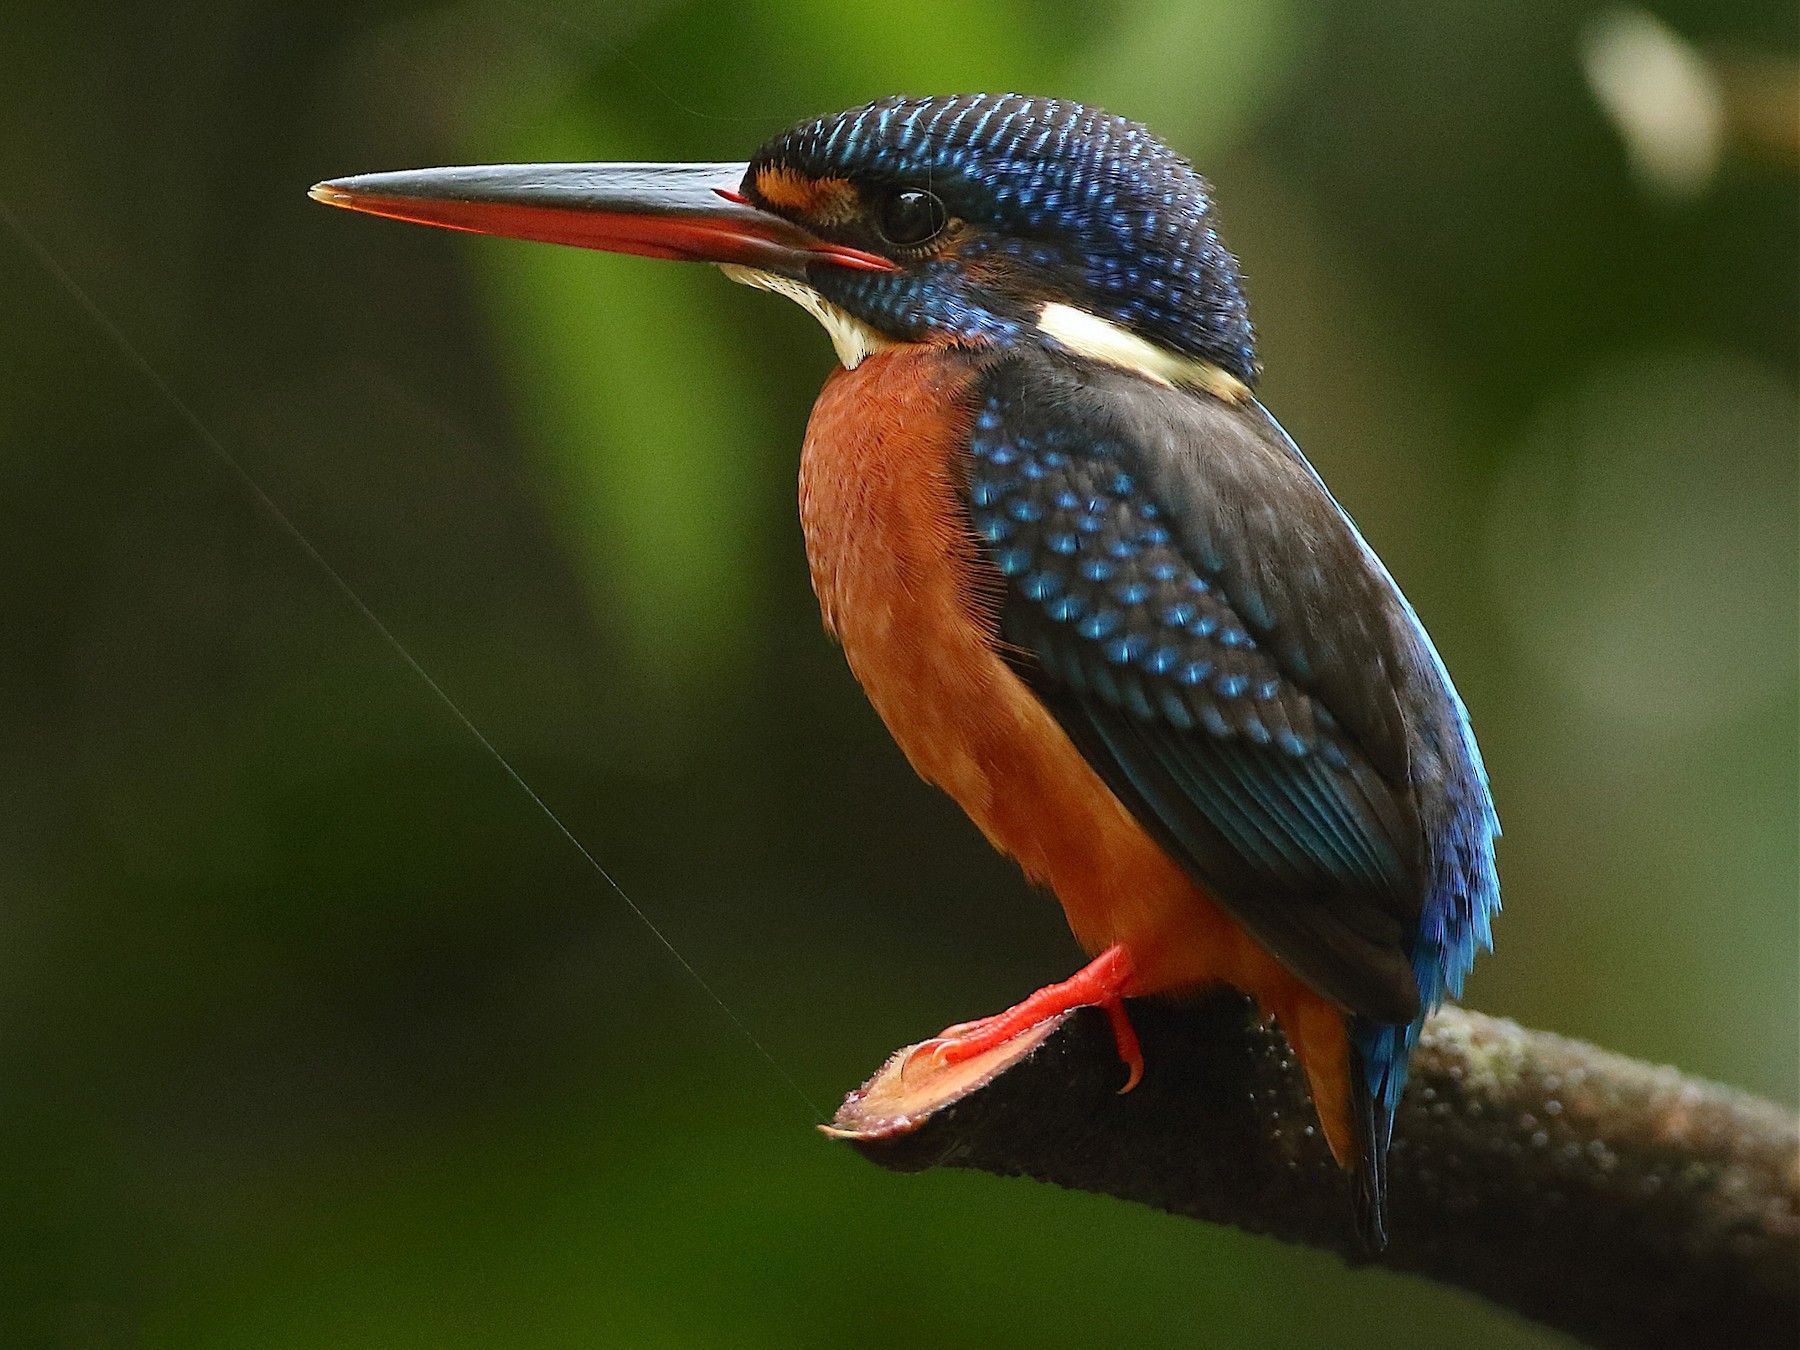 Blue-eared Kingfisher - Savio Fonseca (www.avocet-peregrine.com)